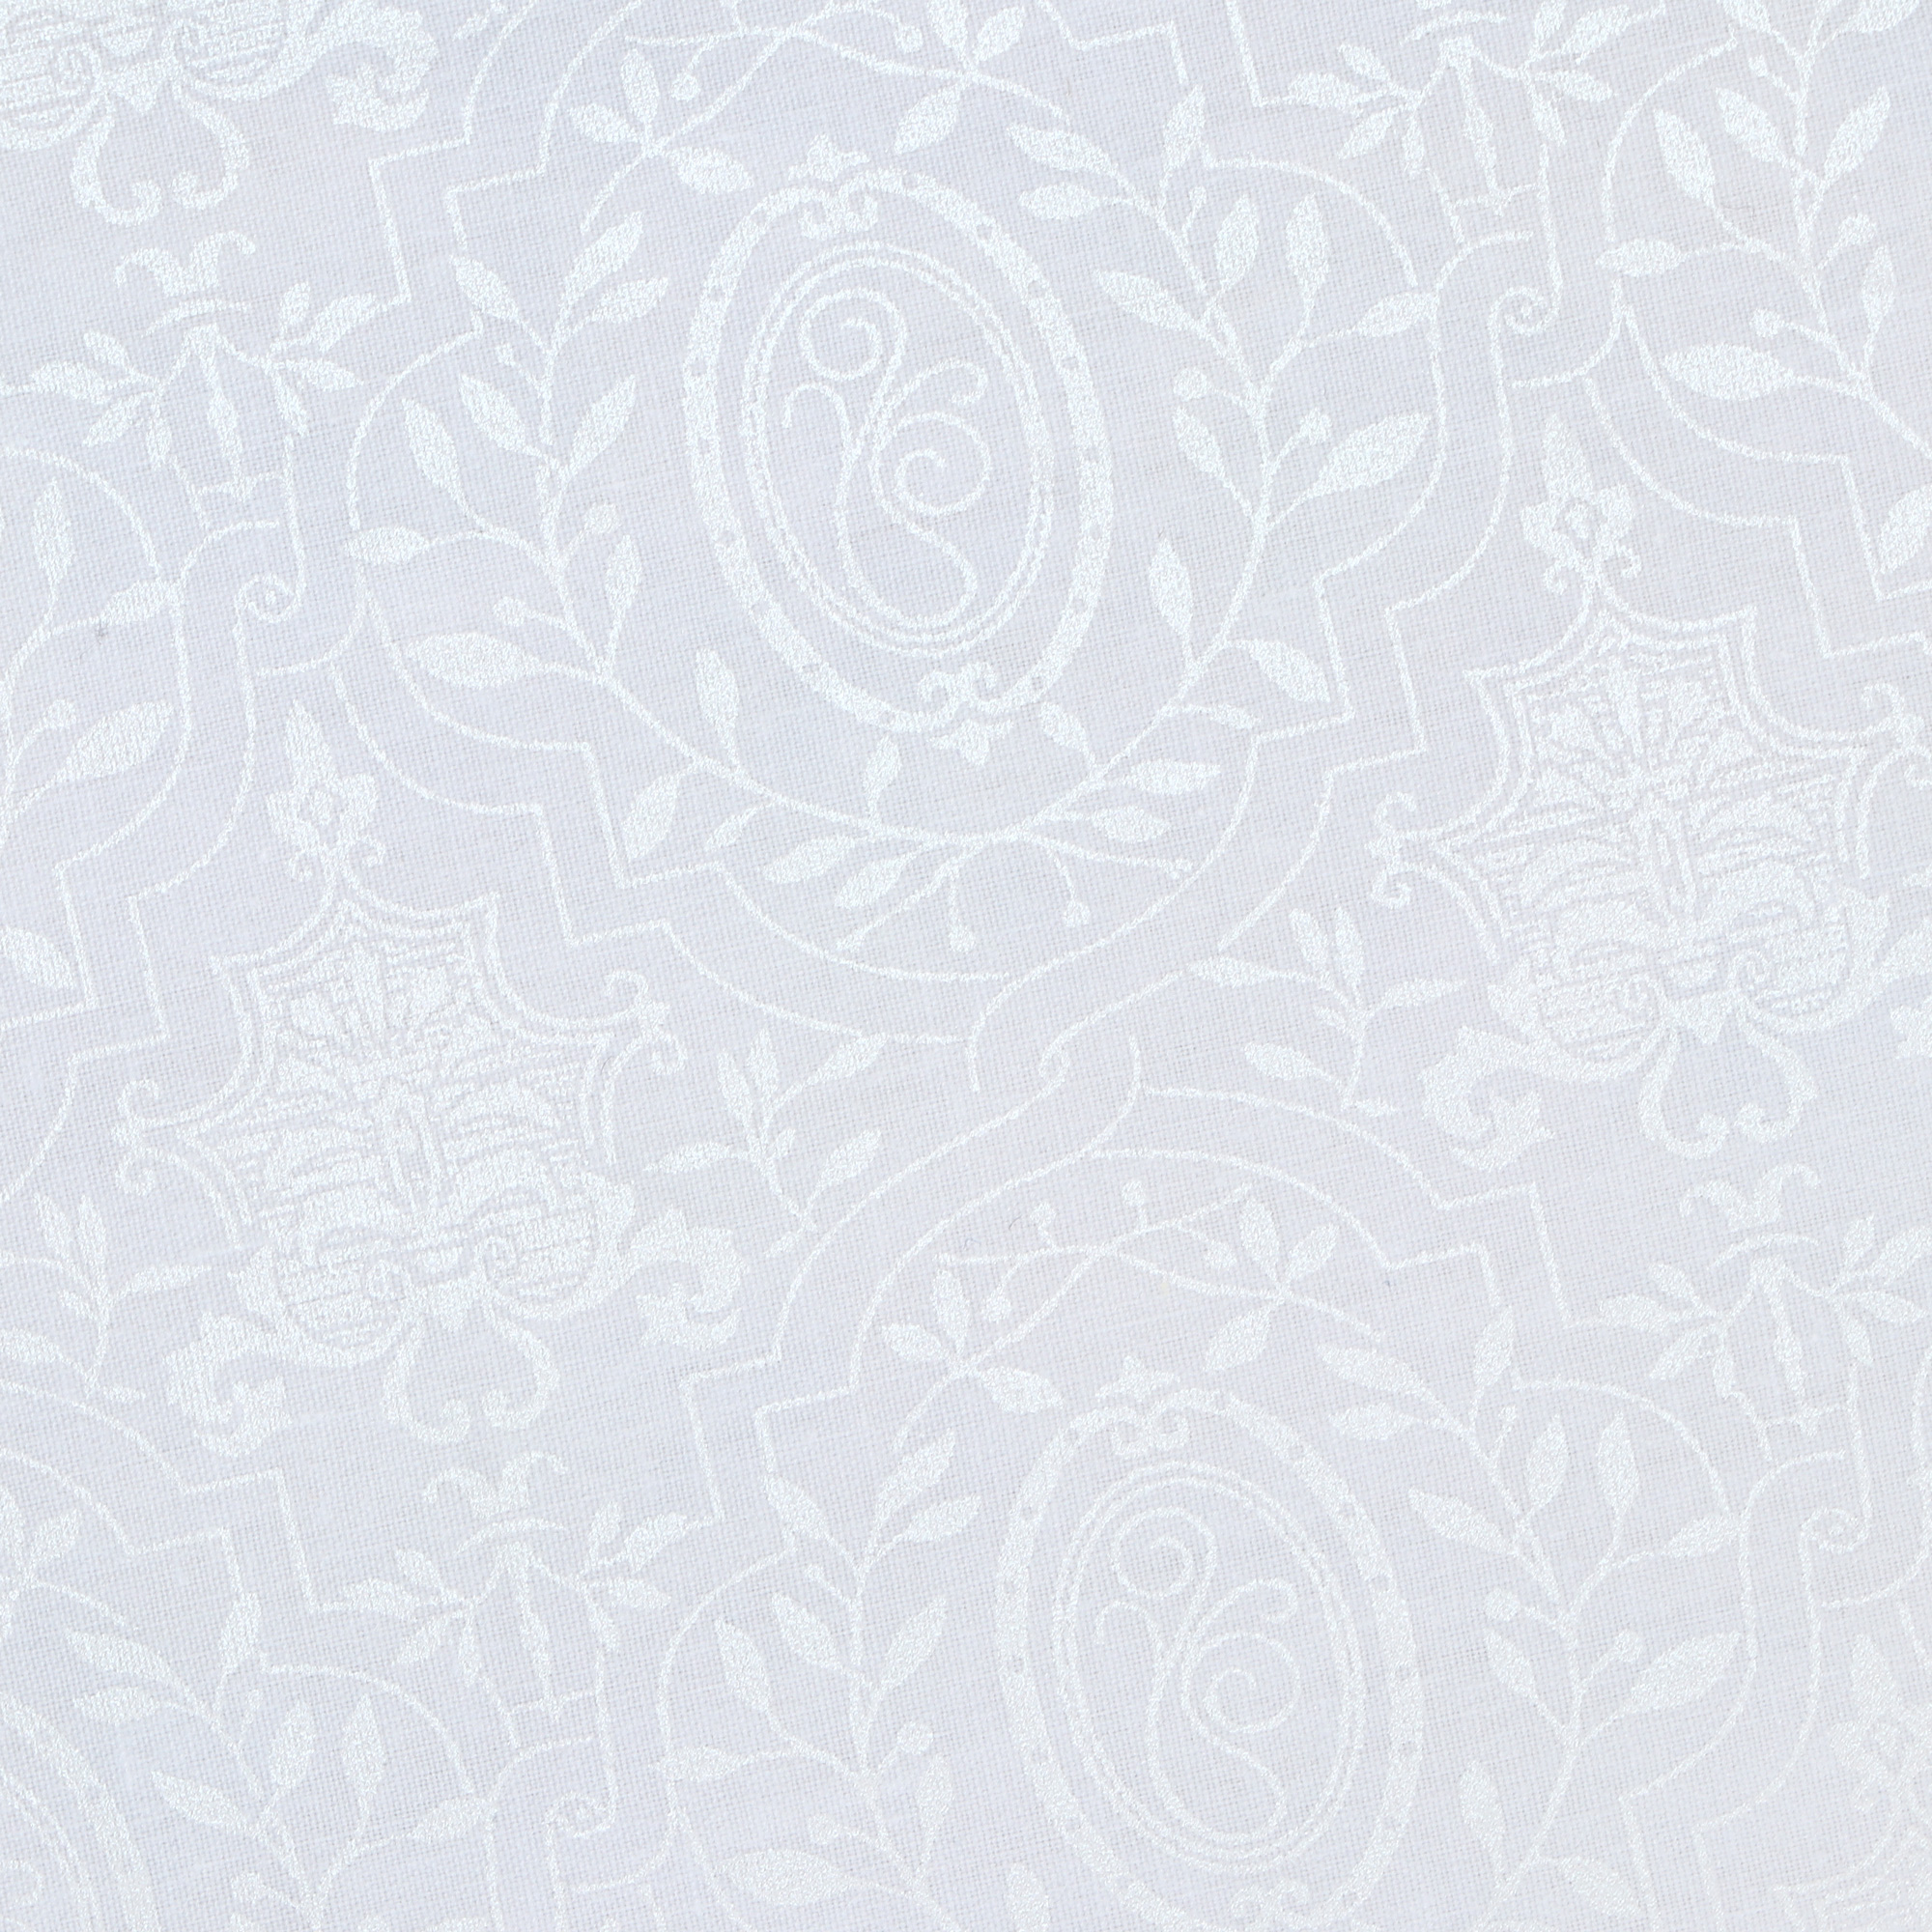 Подушка Medsleep Landau белая 50х70 см, цвет белый - фото 5